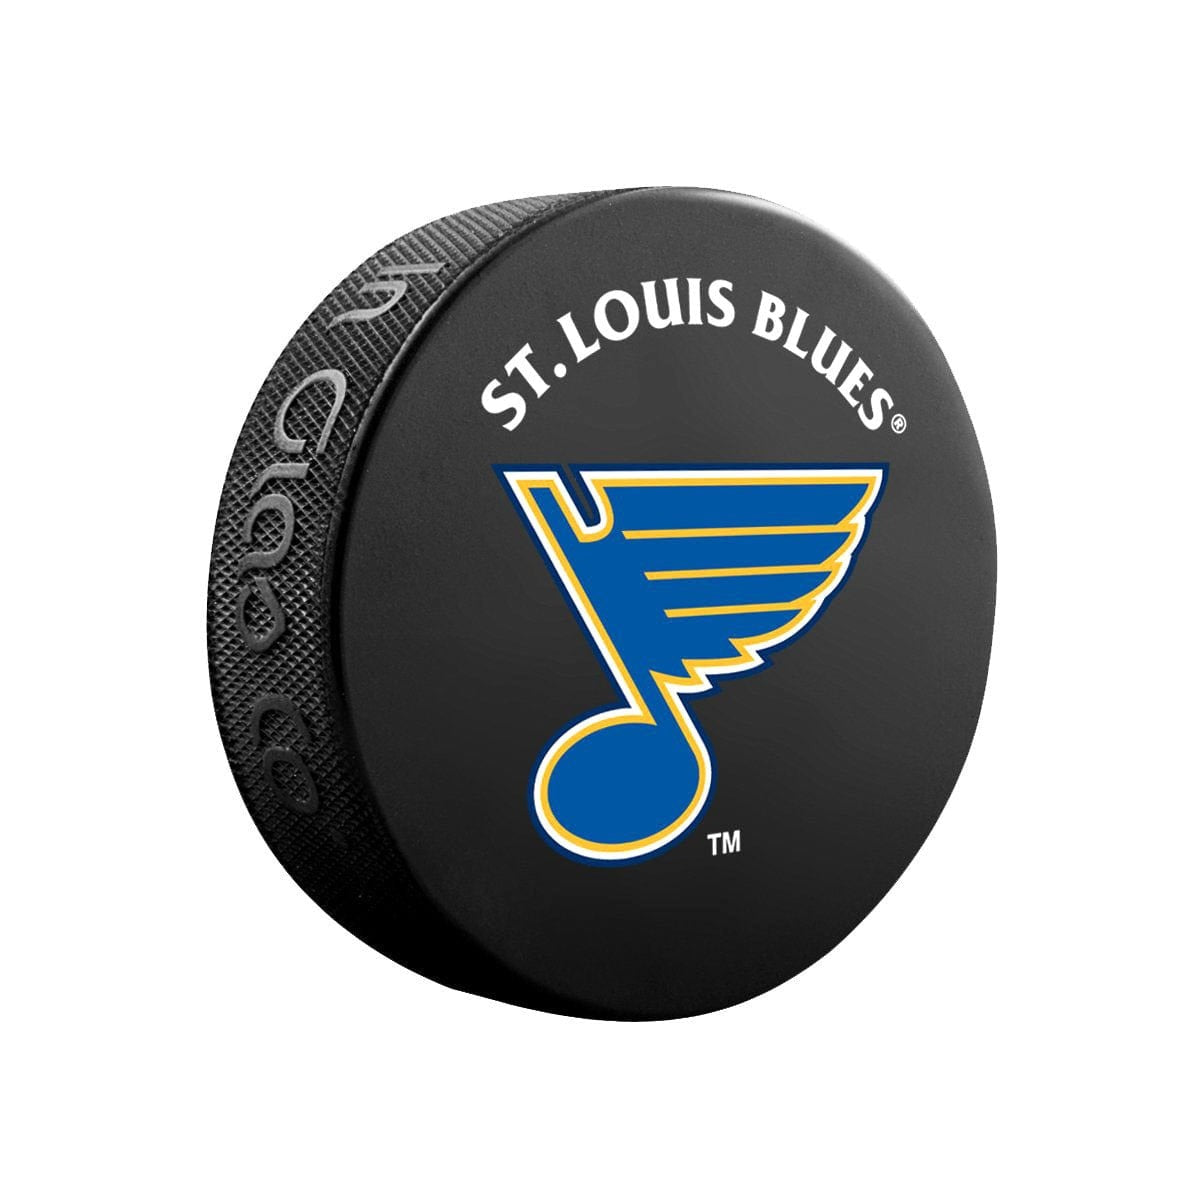 St. Louis Blues Inglasco NHL Basic Logo Hockey Puck - The Hockey Shop Source For Sports